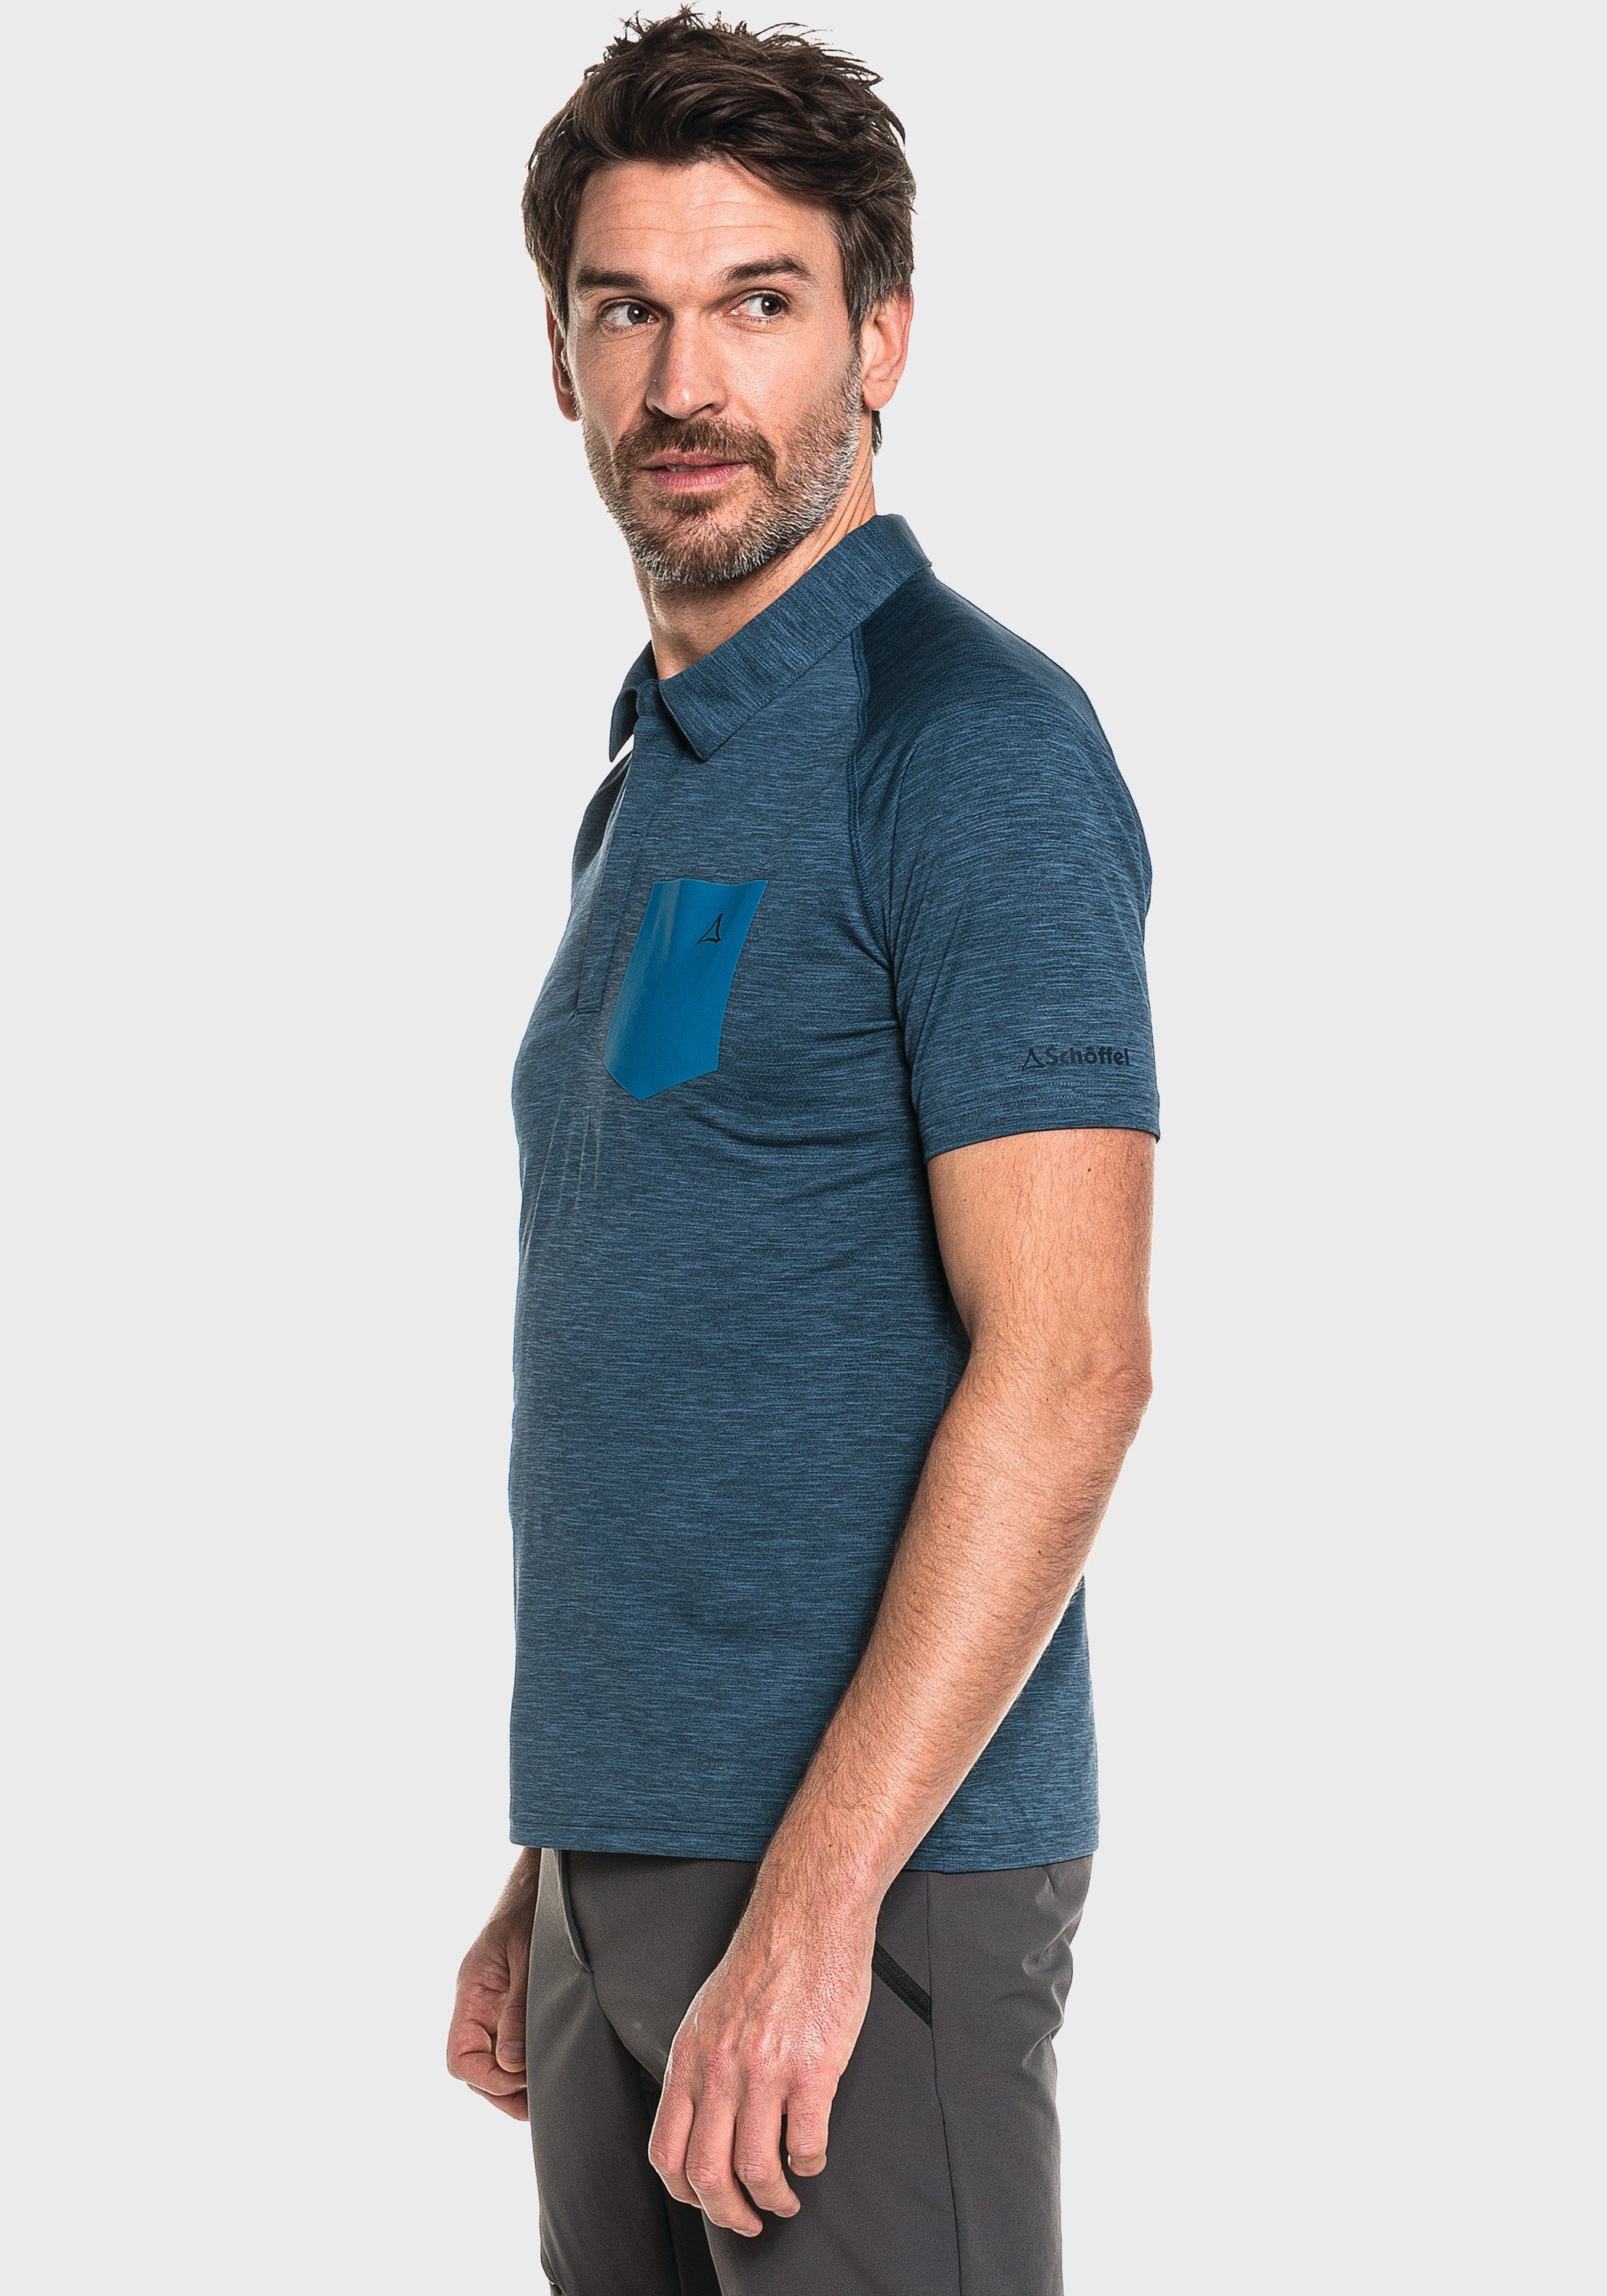 Polo Poloshirt Shirt Schöffel Hocheck blau M